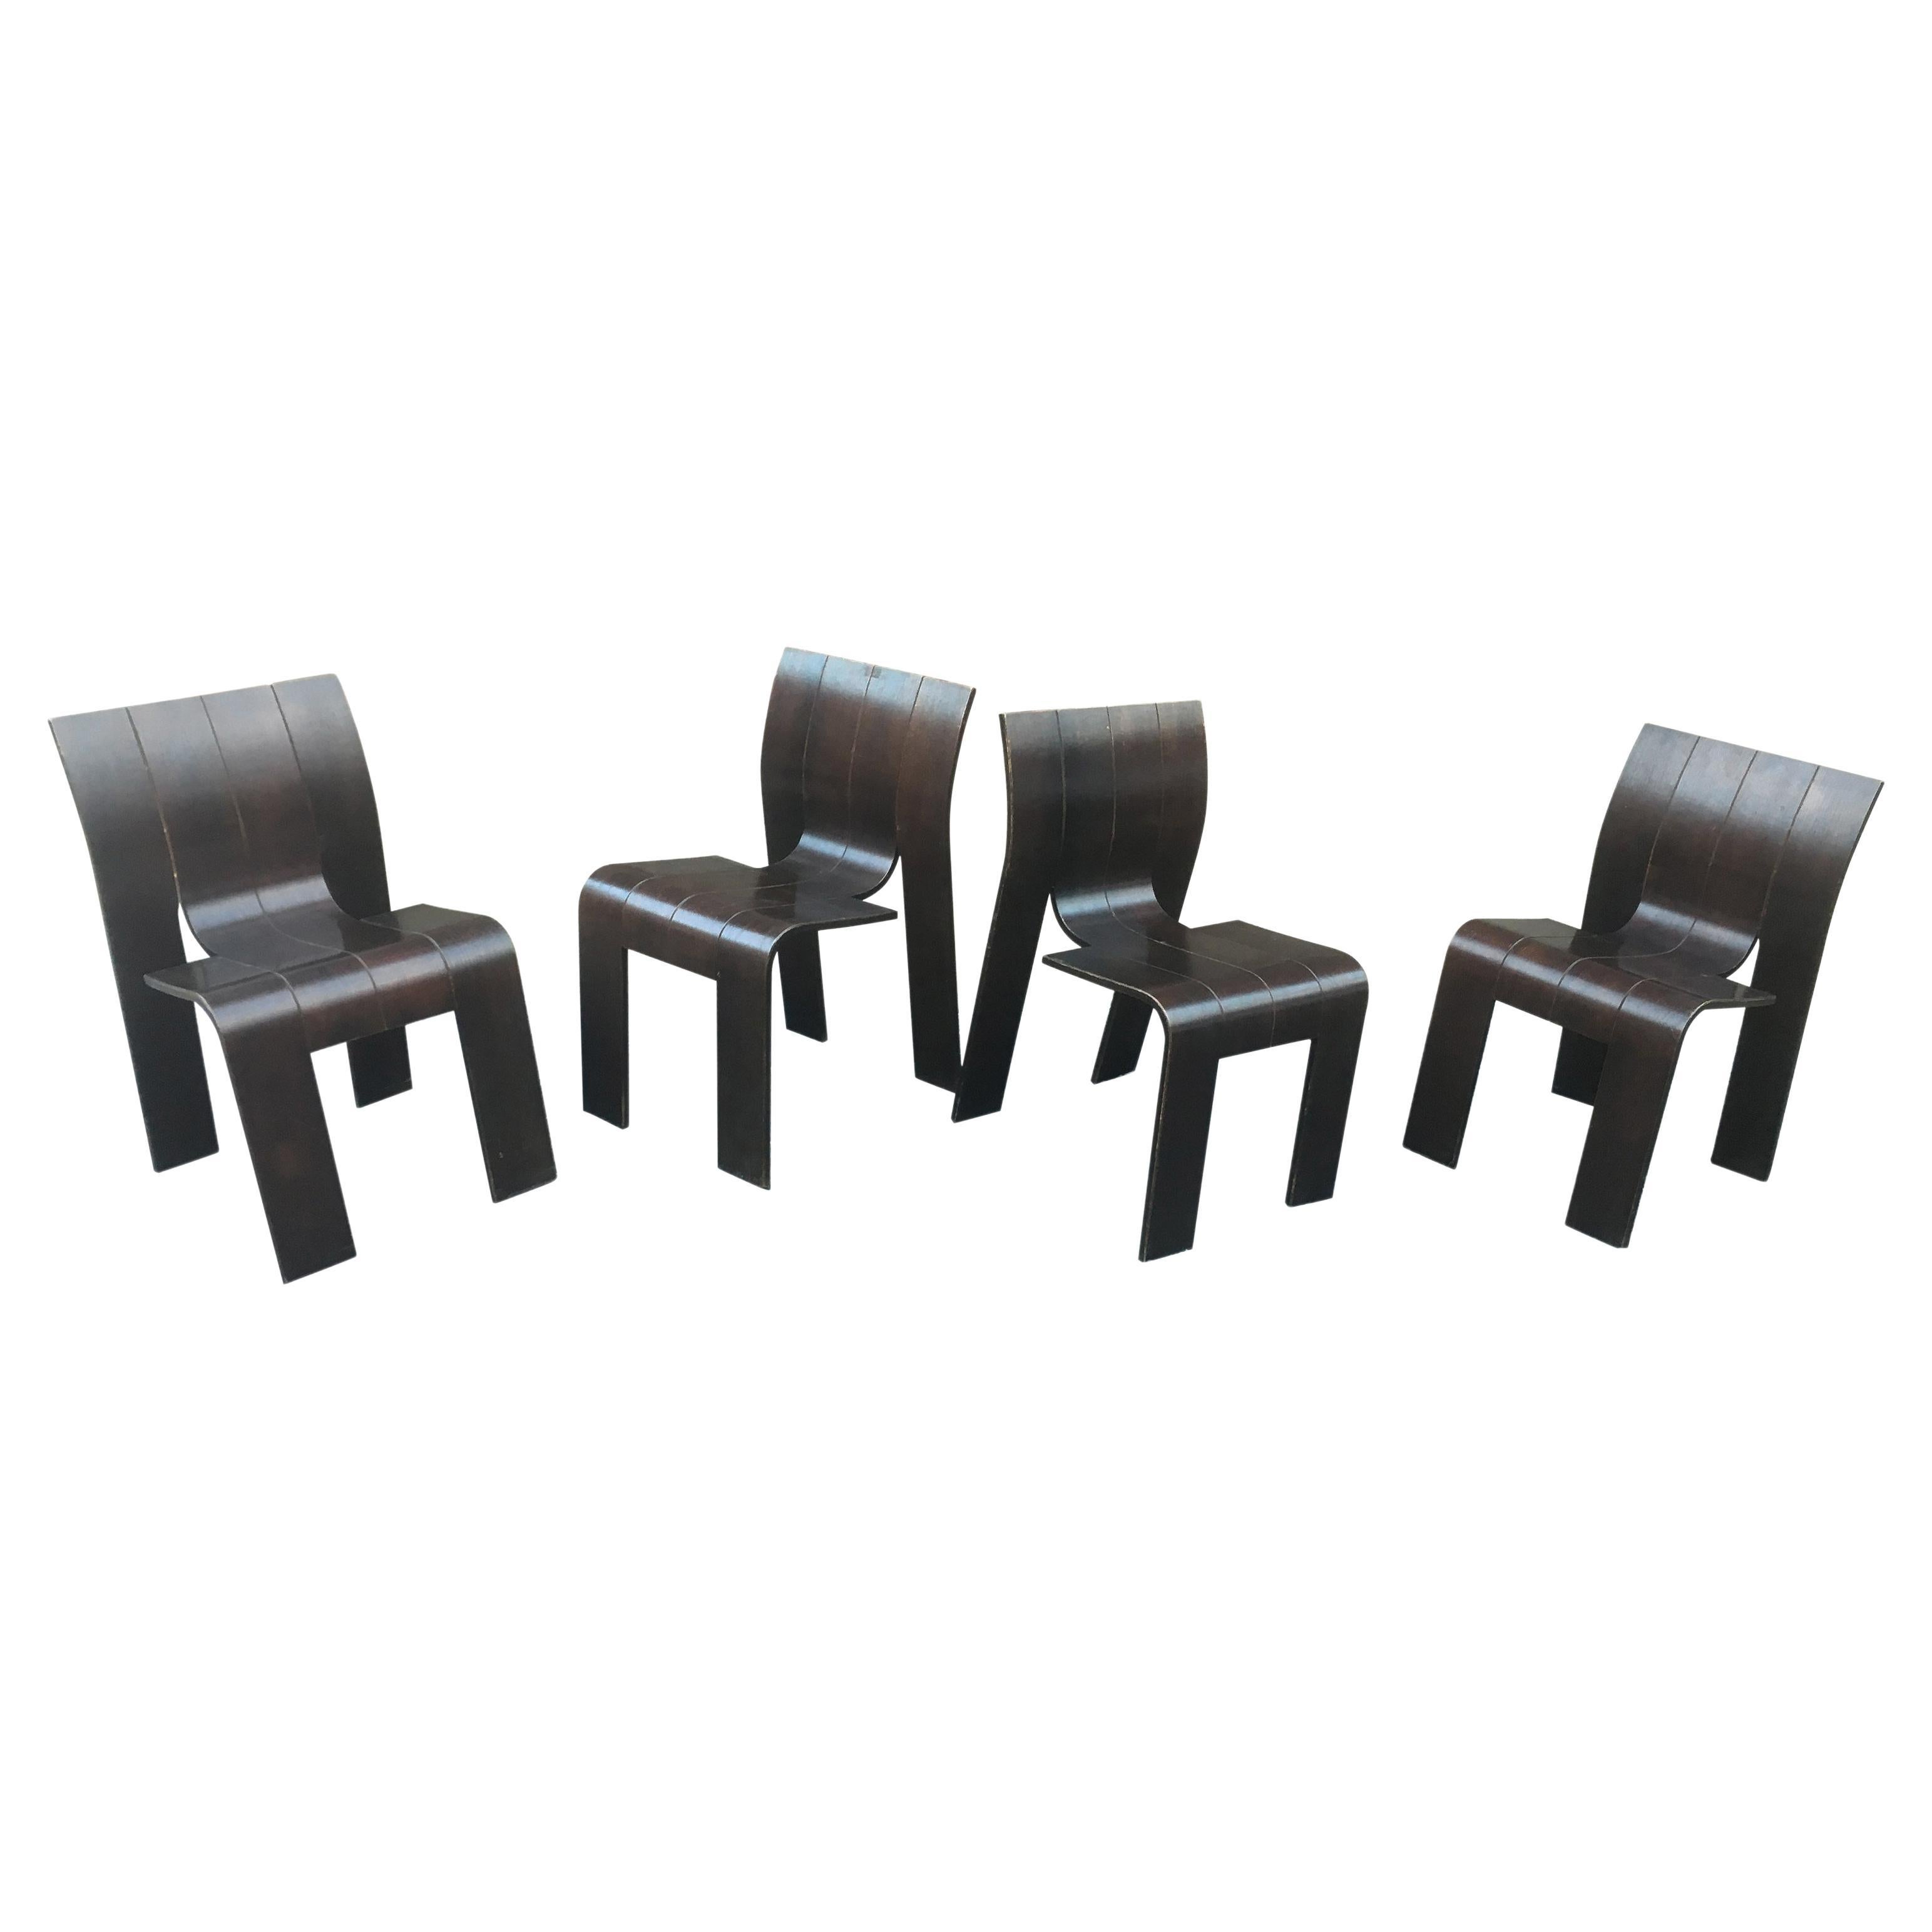 1974, Gijs Bakker, Castelijn, four Stackable Bended Wood Strip Chair For Sale